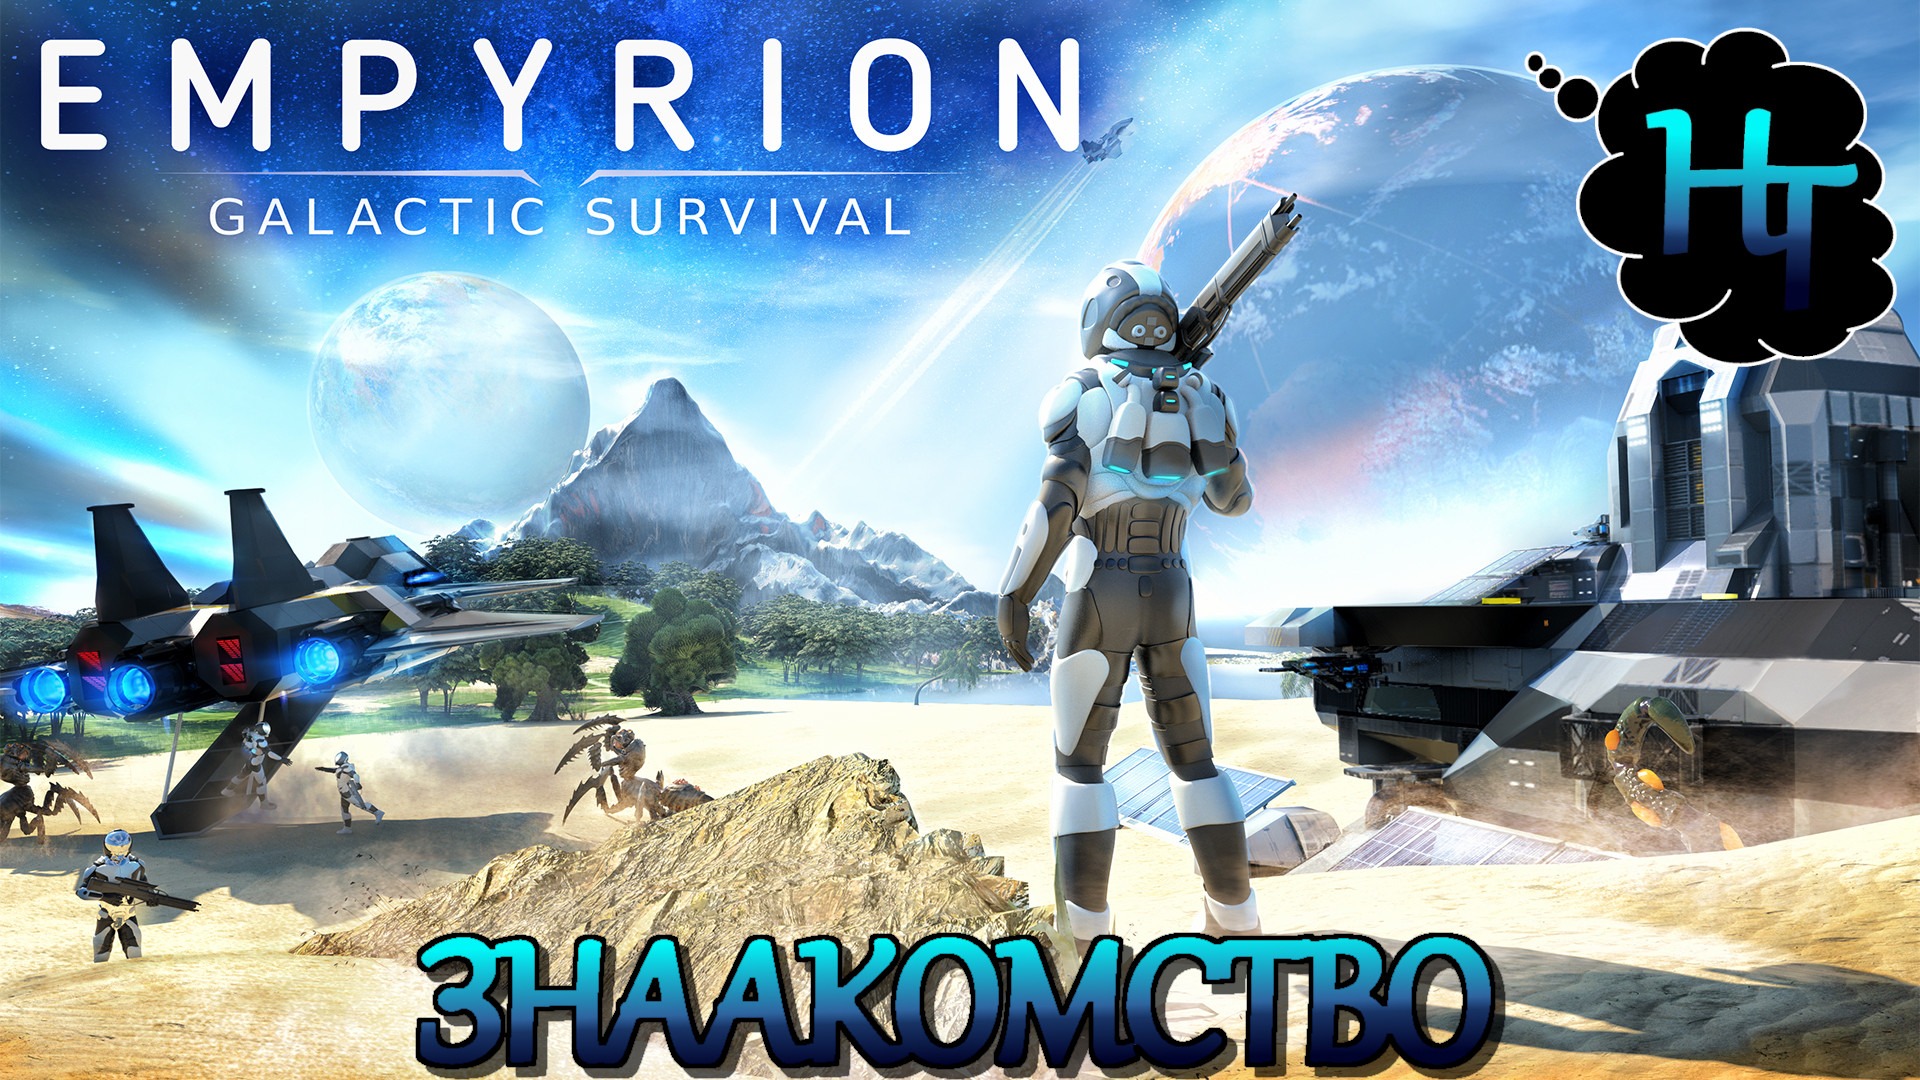 Empyrion galactic survival игра. Эмпирион галактик СУРВАЙВЛ. Empyrion игра. Игра Empyrion Galactic Survival. Empyrion Galactic Survival последняя версия.